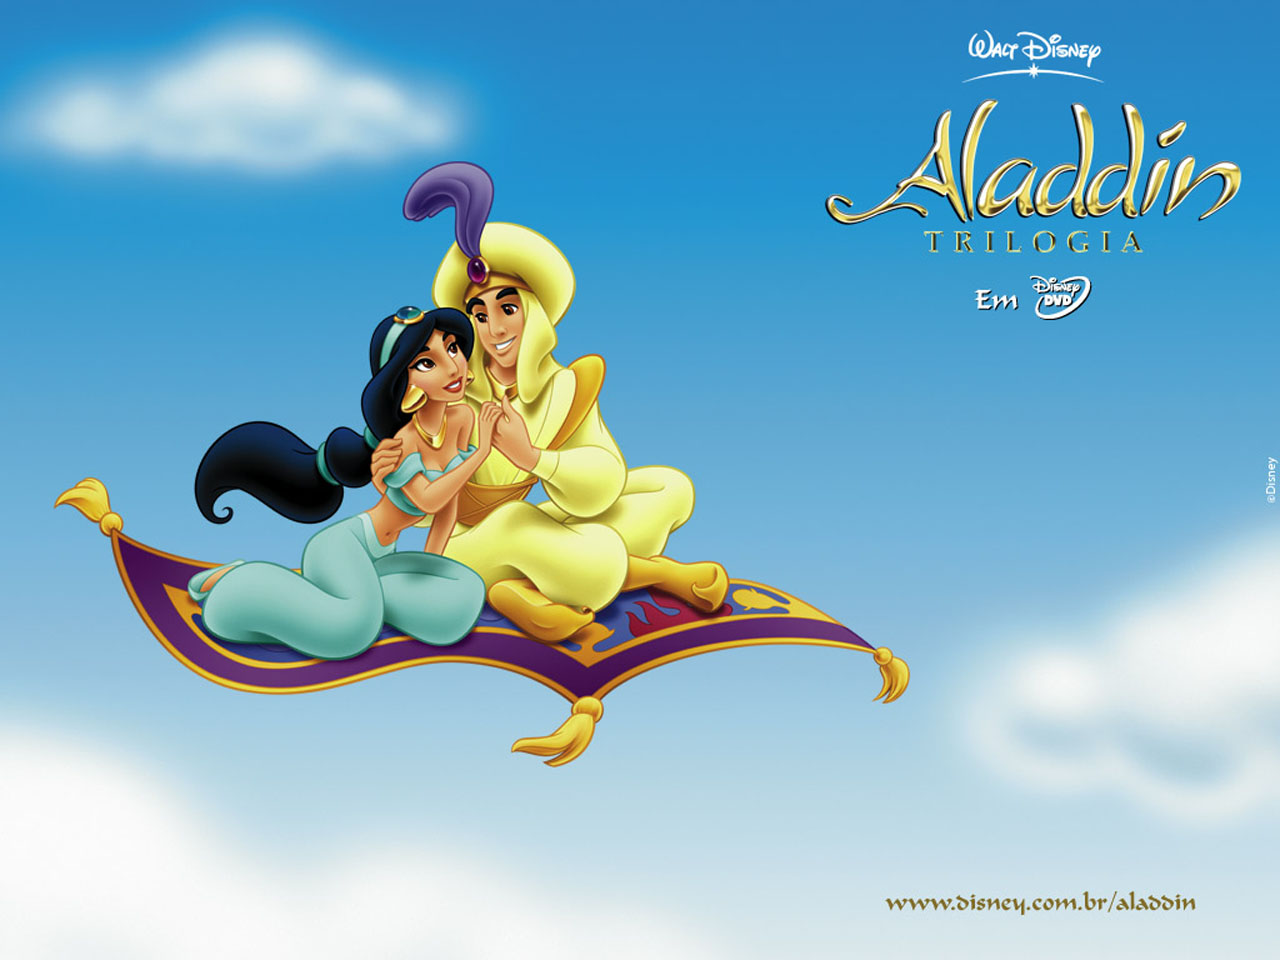 The Sultans Palace Aladdin Cartoon Walt Disney Hd Wallpaper 1920x1080   Wallpapers13com